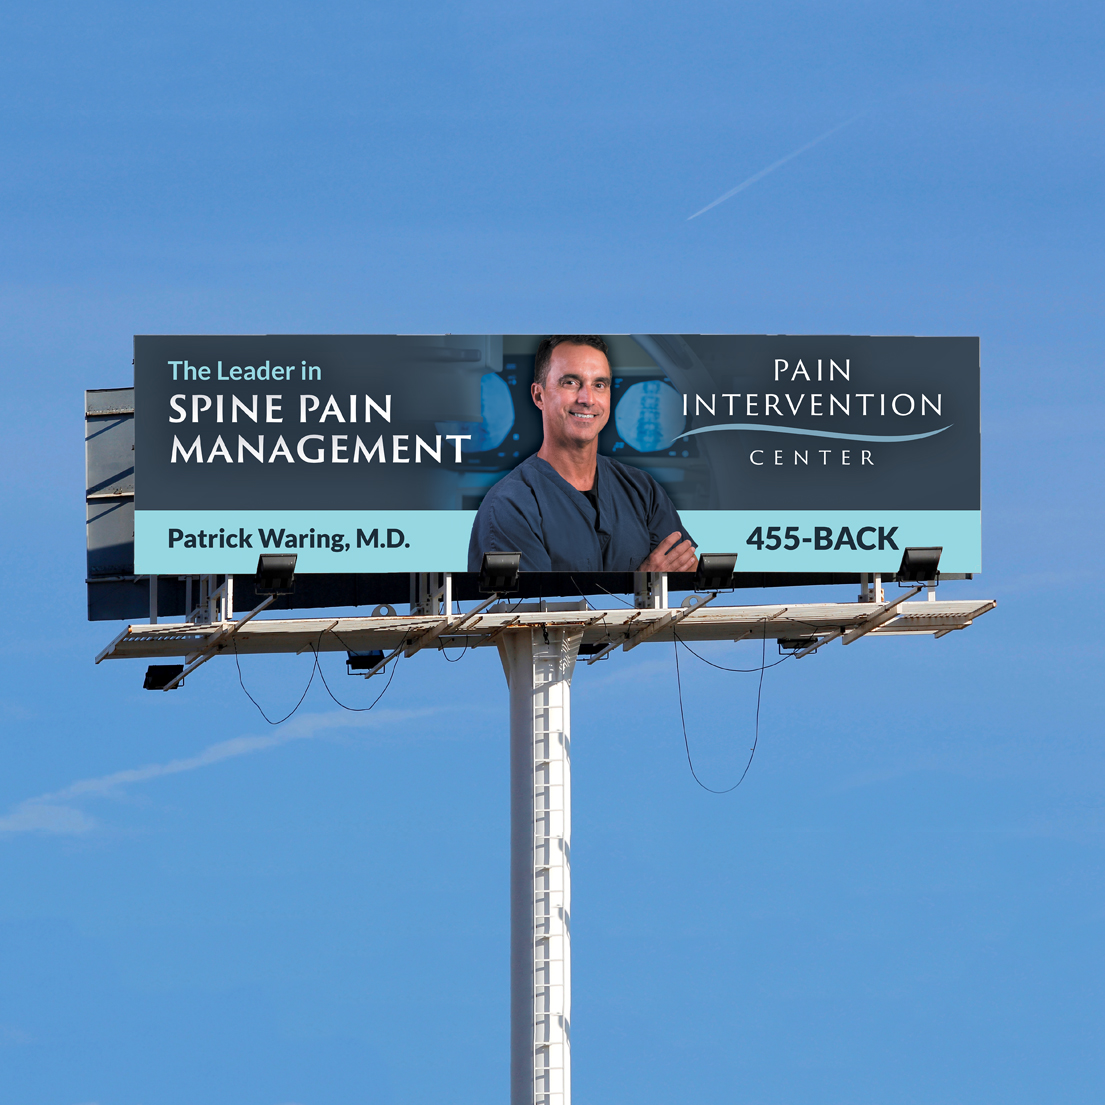 Pain Intervention Center Ads